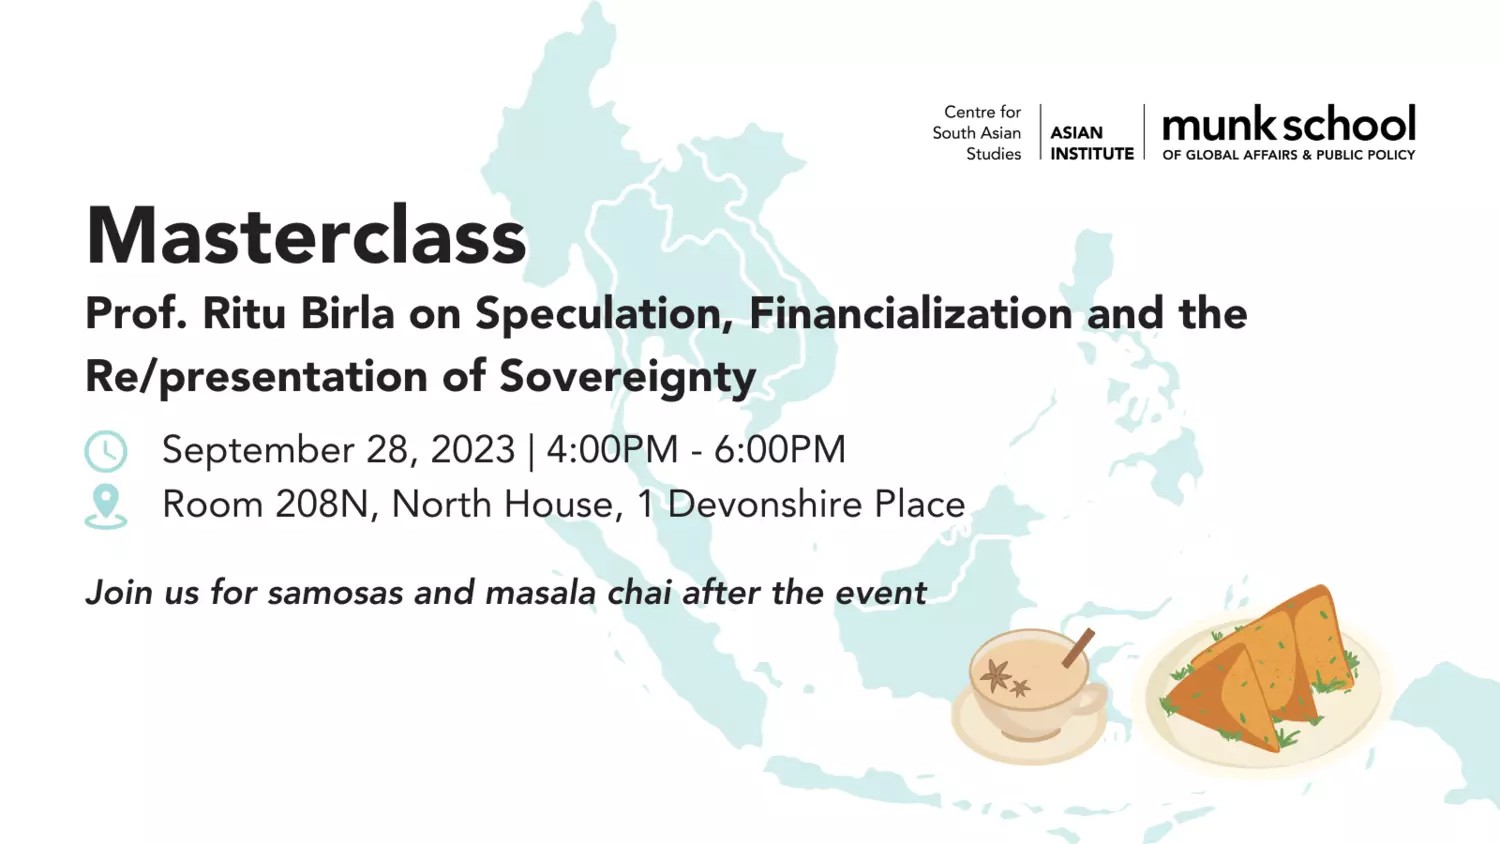 Masterclass: Prof. Ritu Birla on Speculation, Financialization and the Re/presentation of Sovereignty